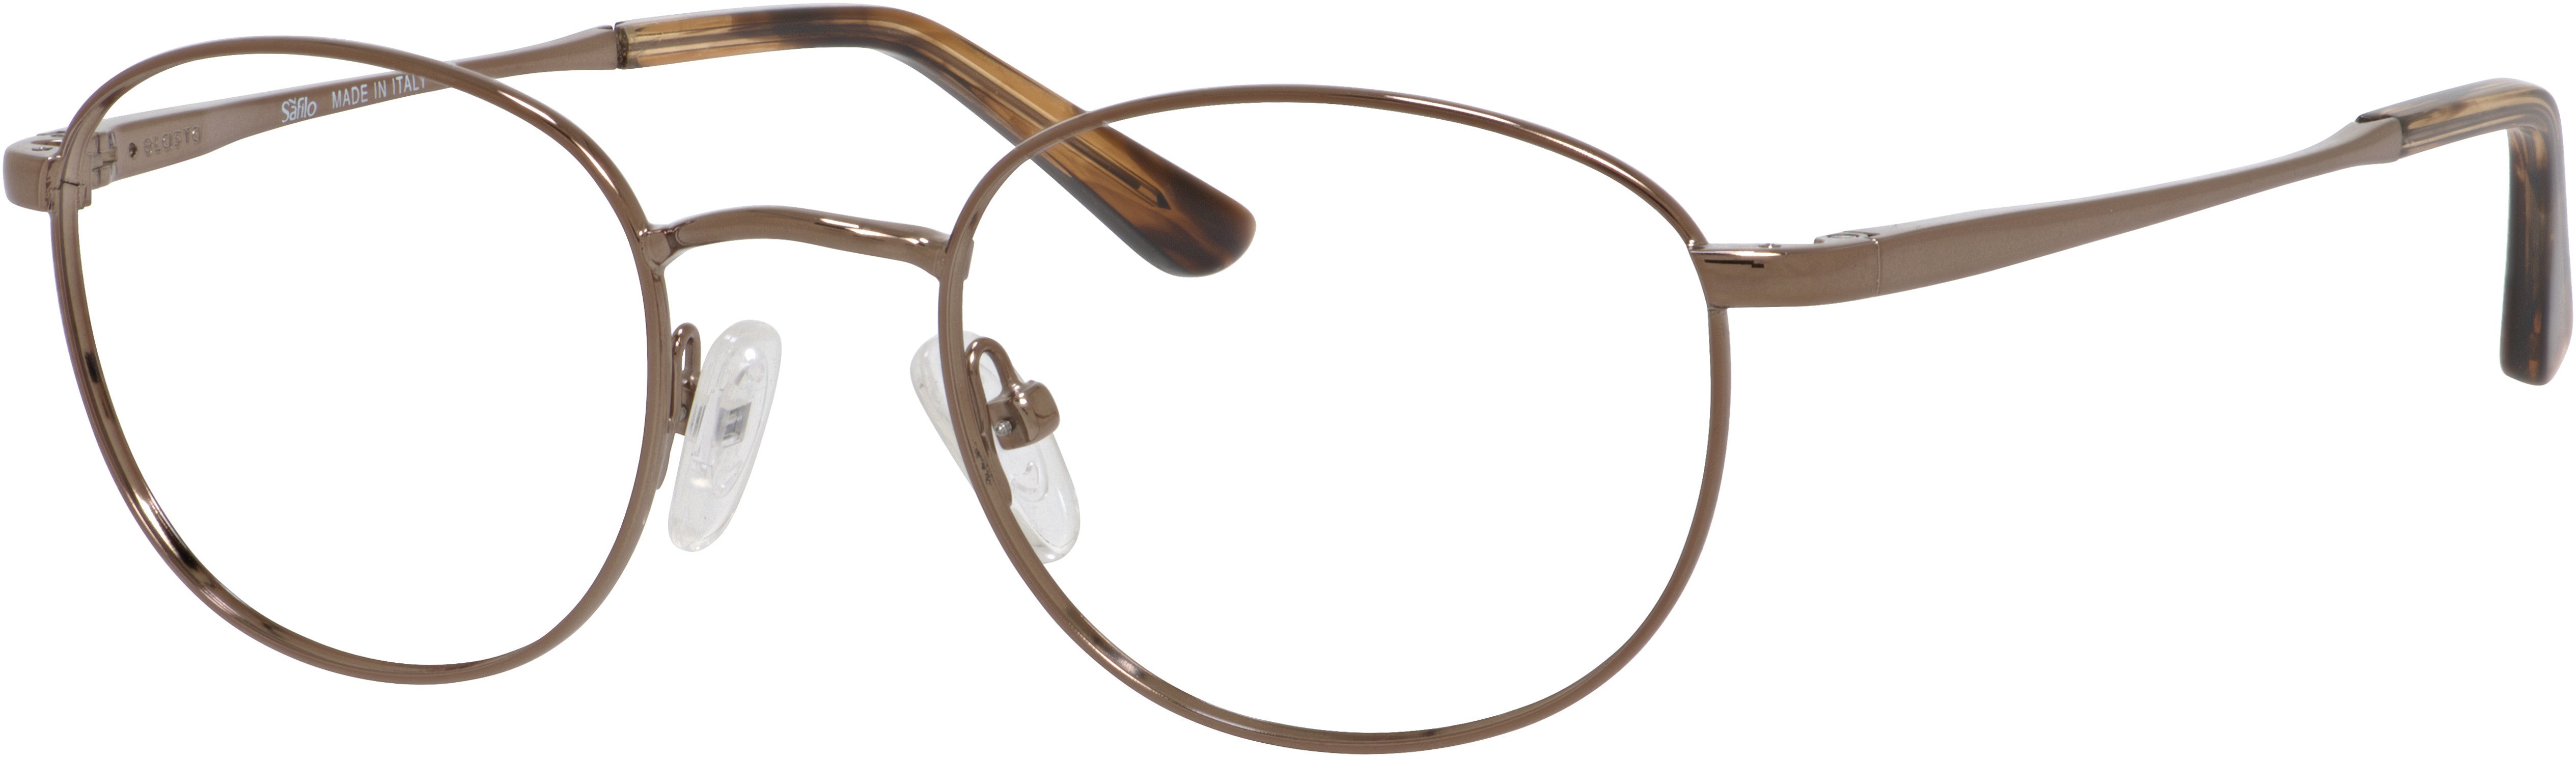  Elasta 7209 Oval Modified Eyeglasses 01WK-01WK  Light Brown (00 Demo Lens)